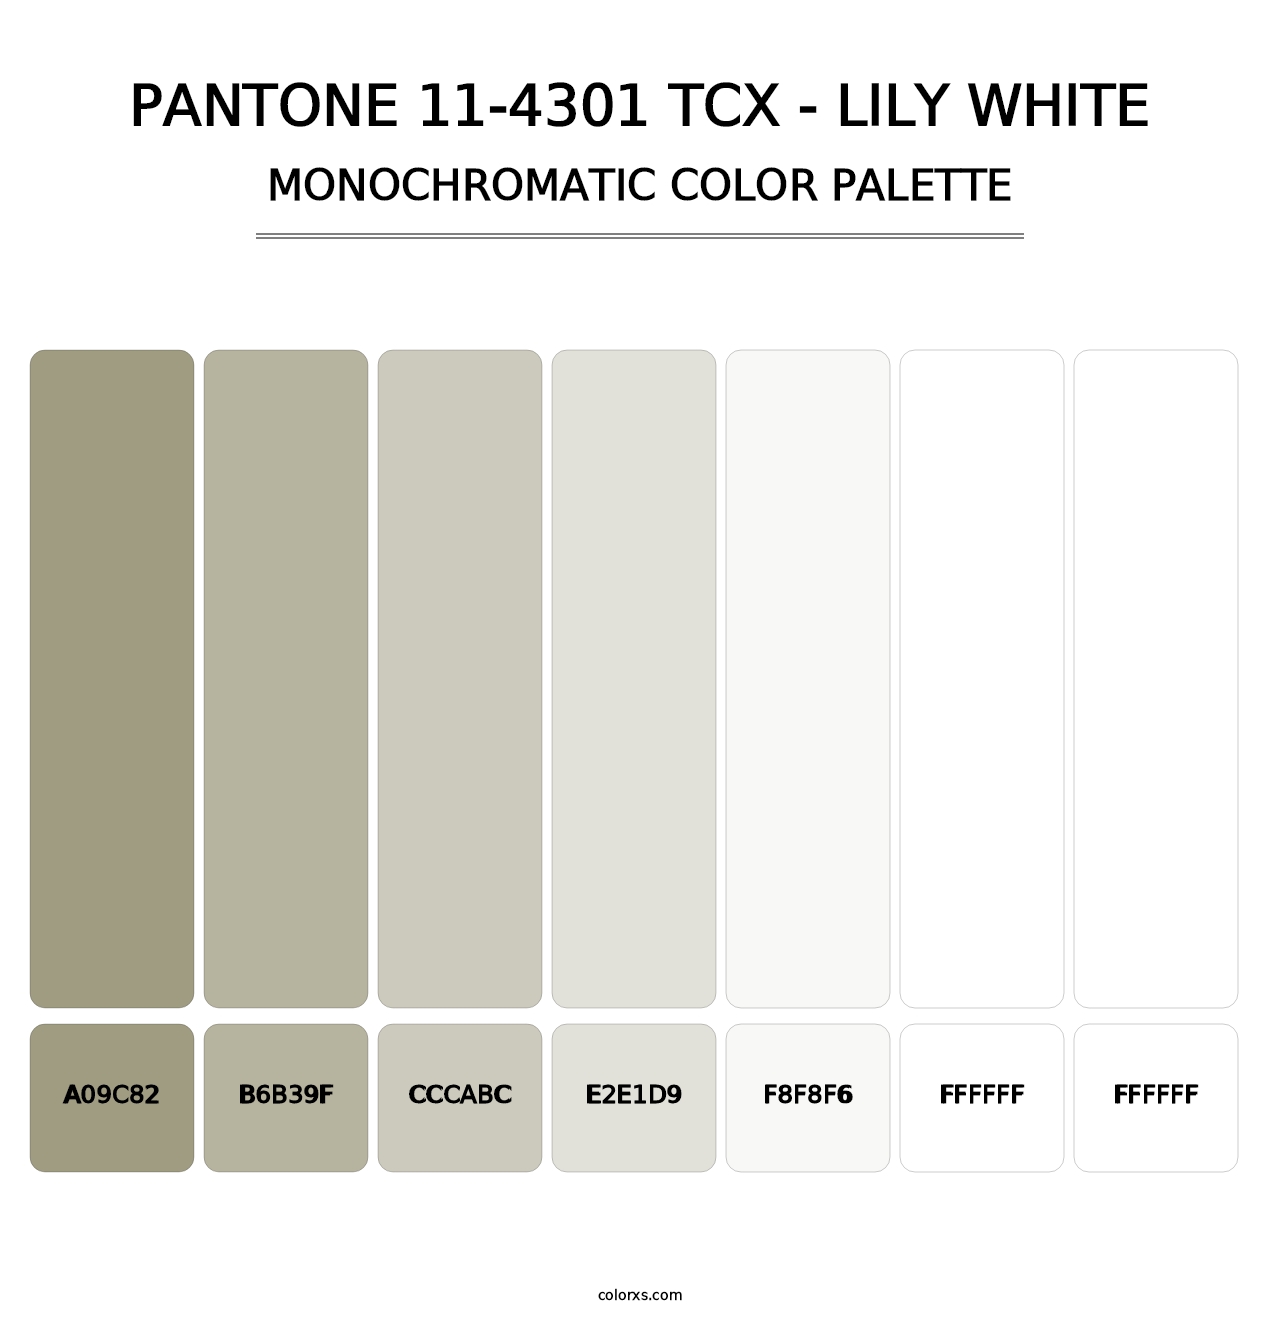 PANTONE 11-4301 TCX - Lily White - Monochromatic Color Palette